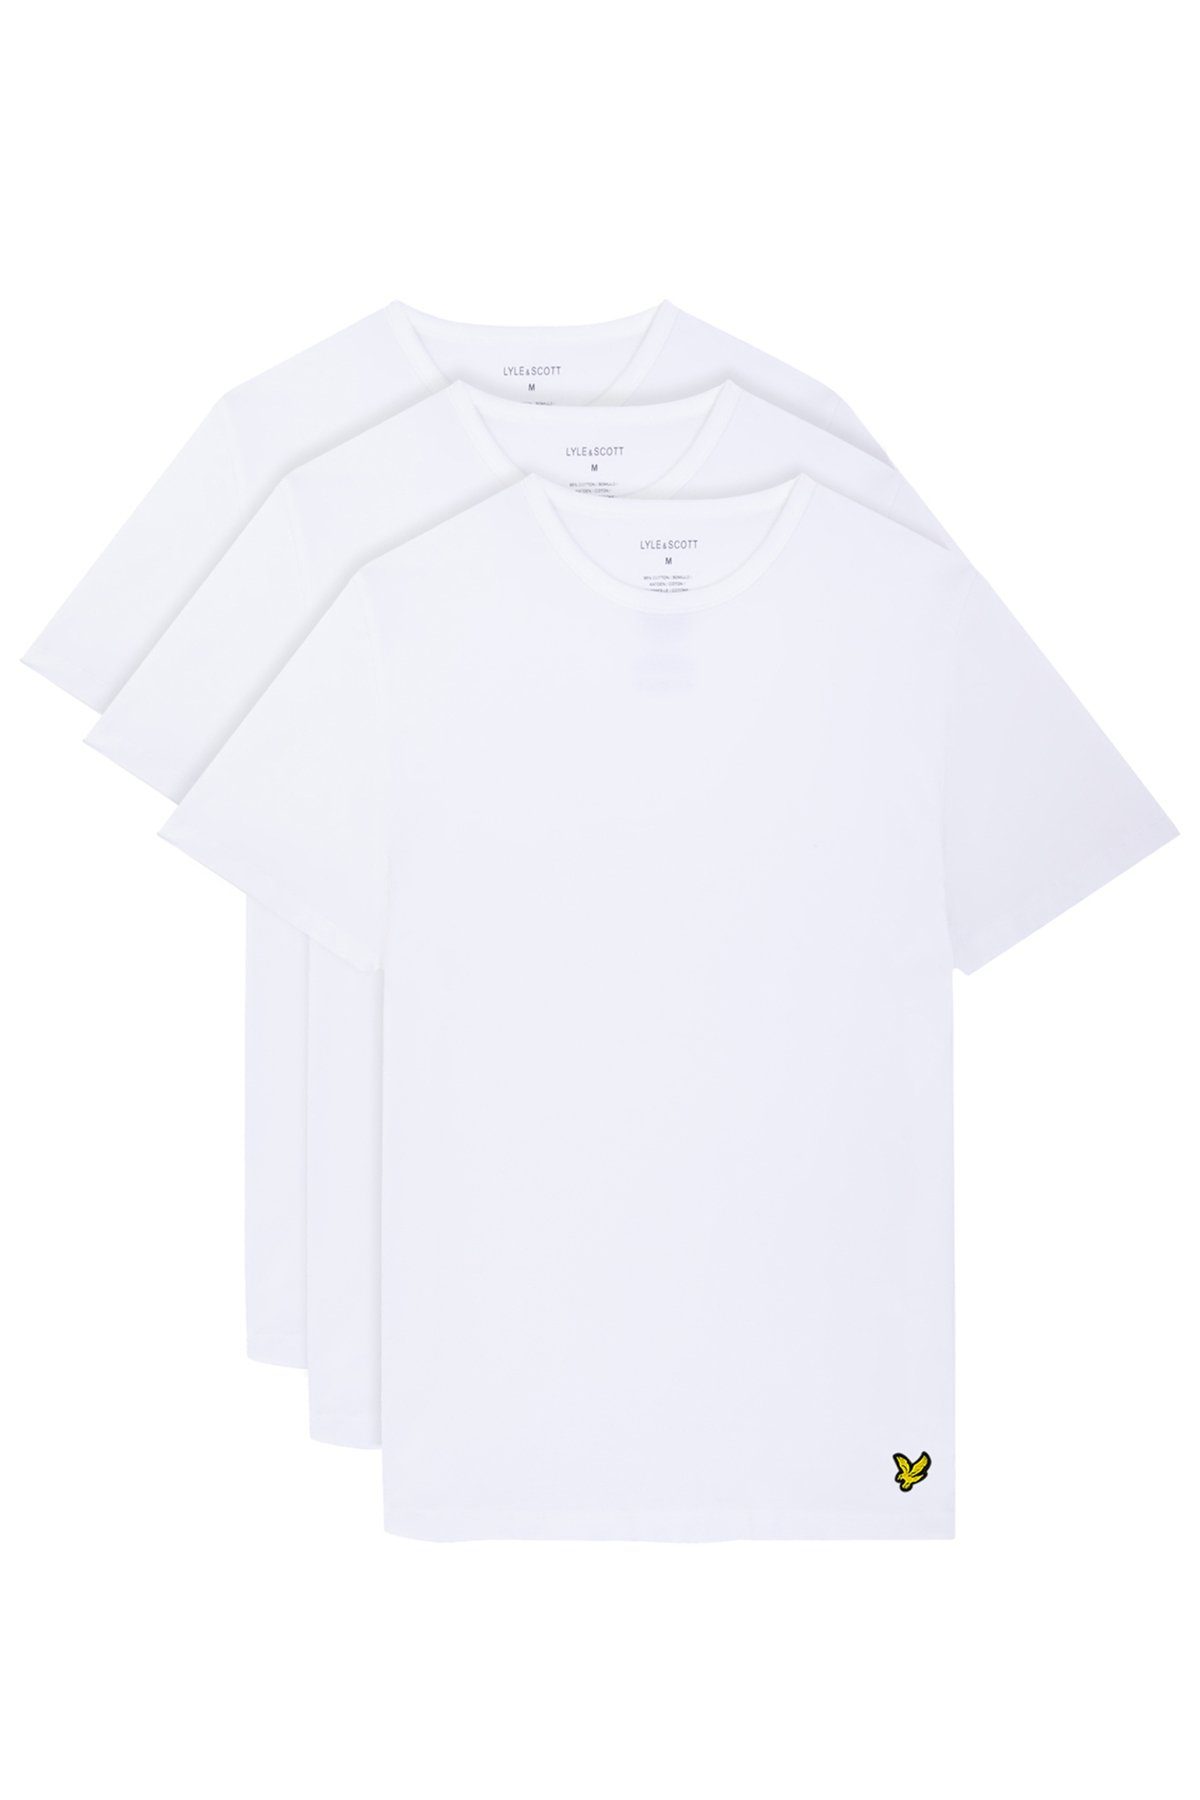 Lyle & Scott T-Shirt Basic Farben (3Er-Set) Weiß